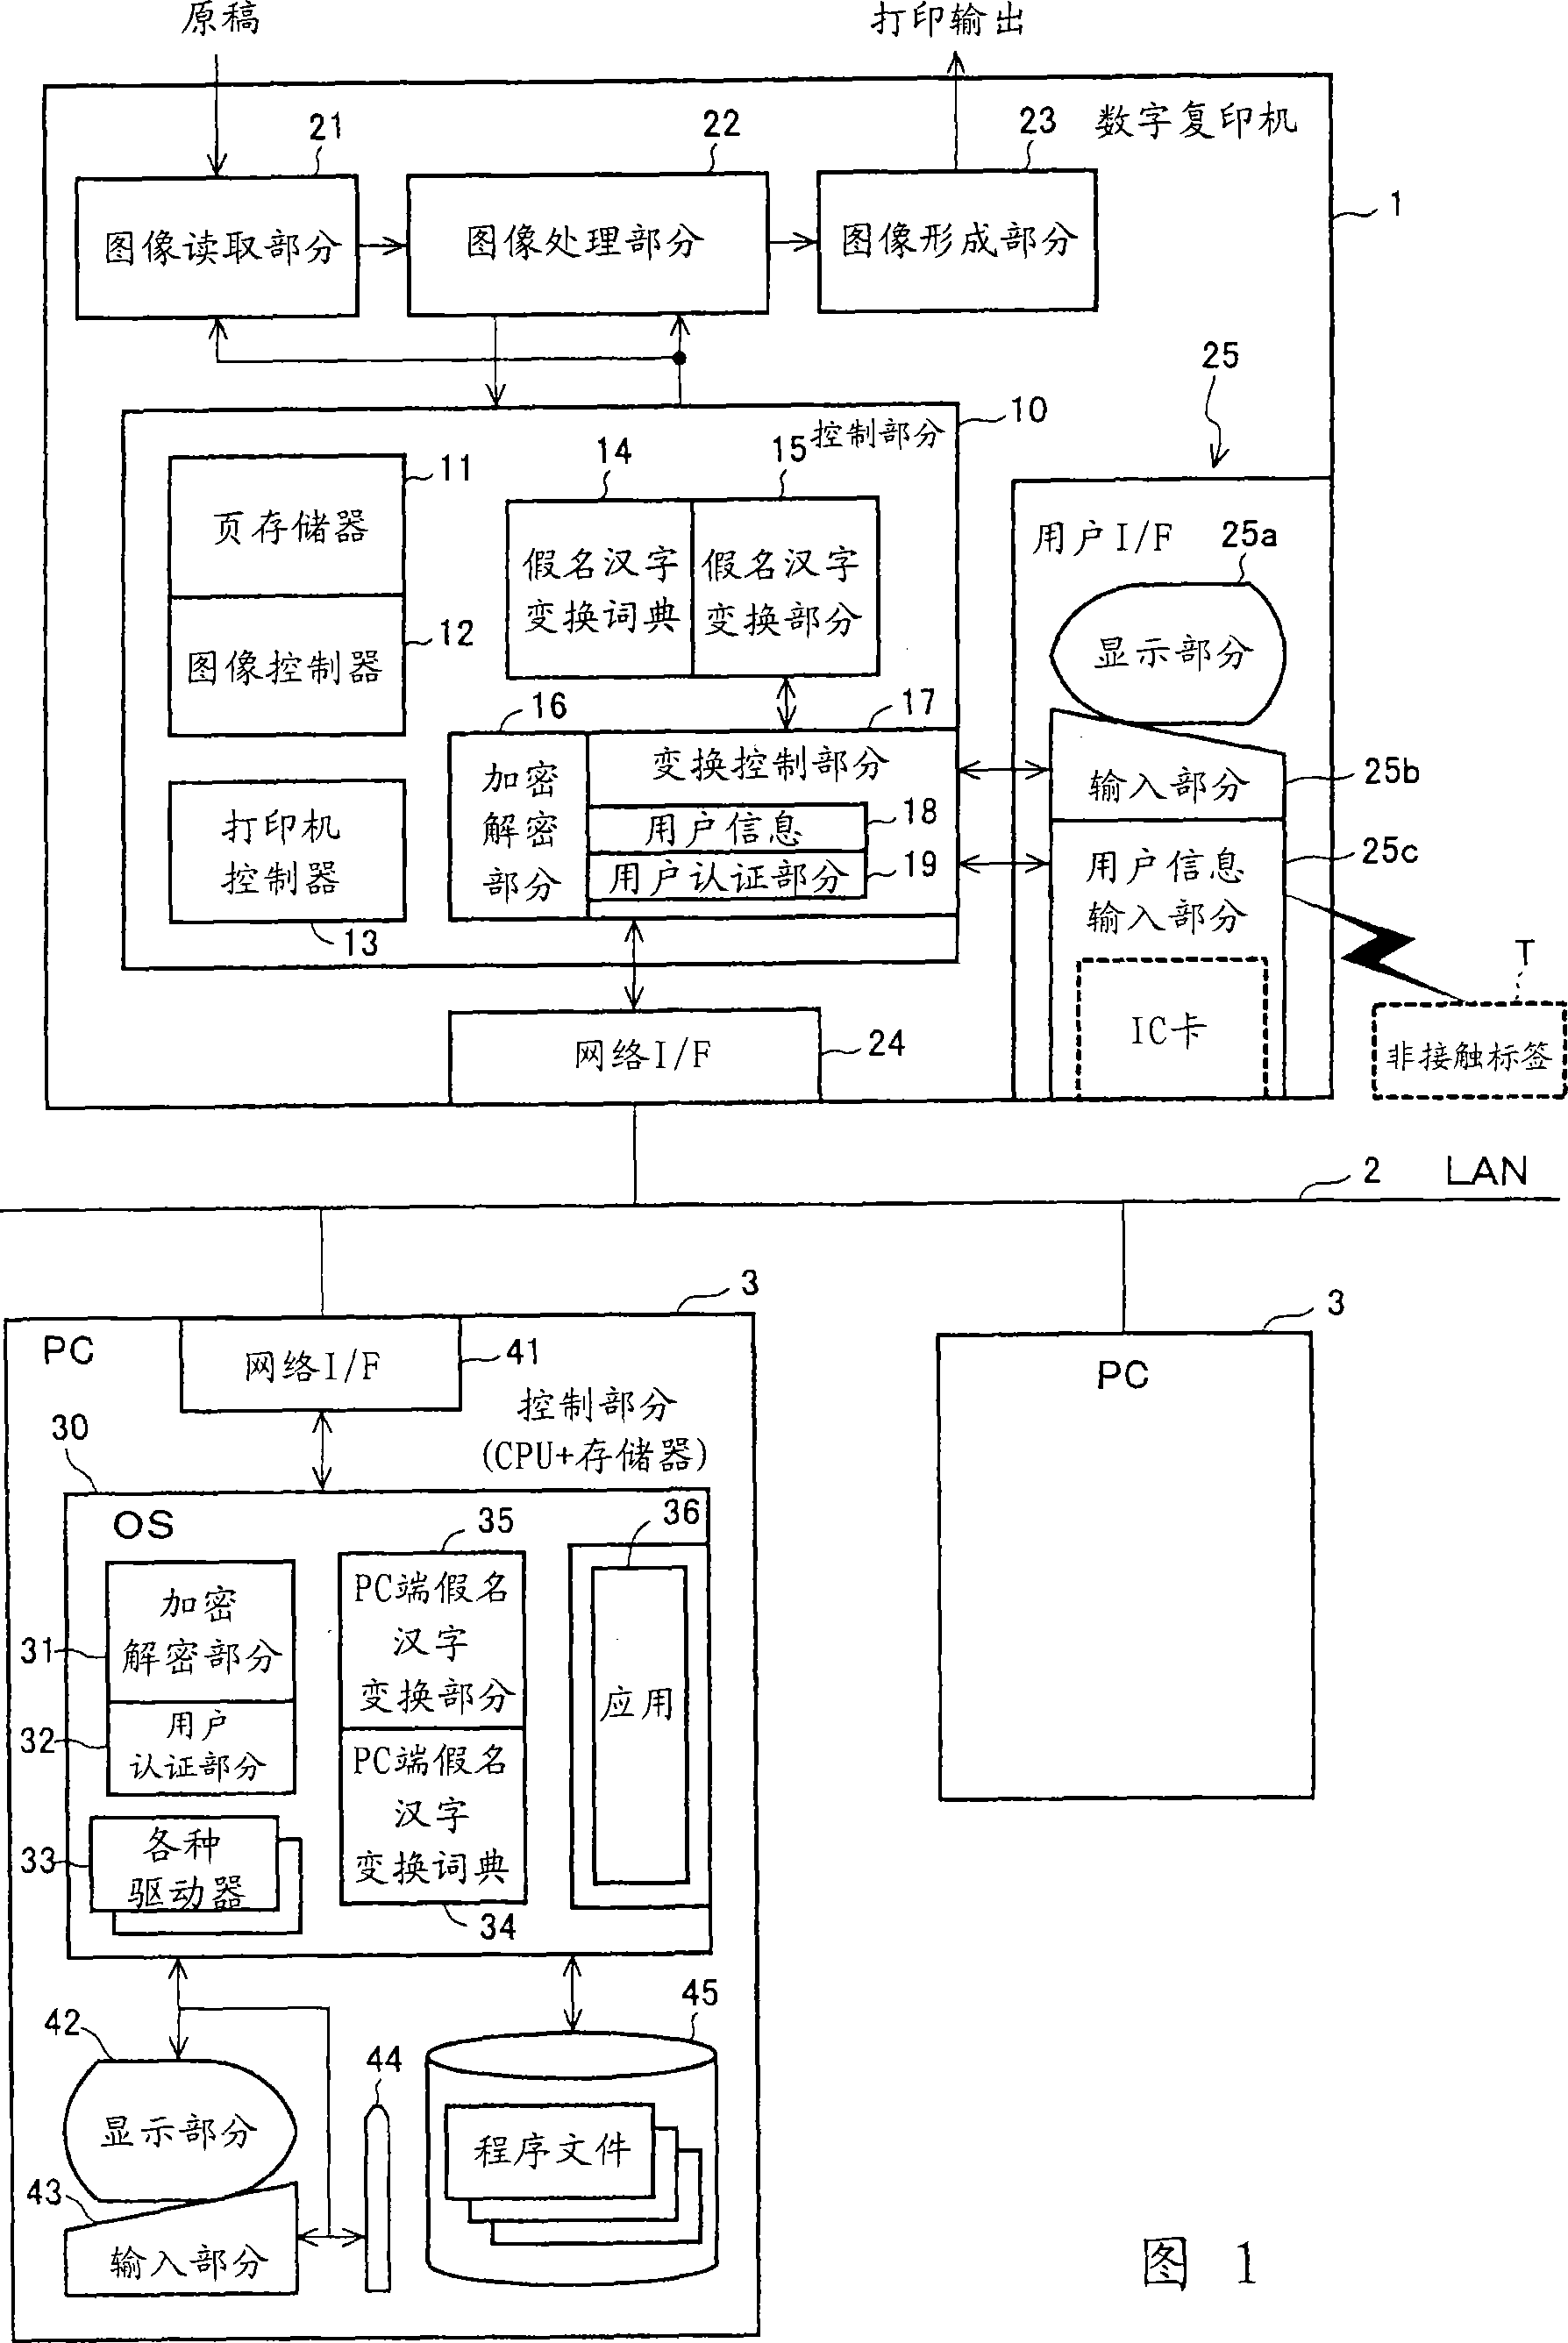 Information processing apparatus, computer, information processing system, and information processing method